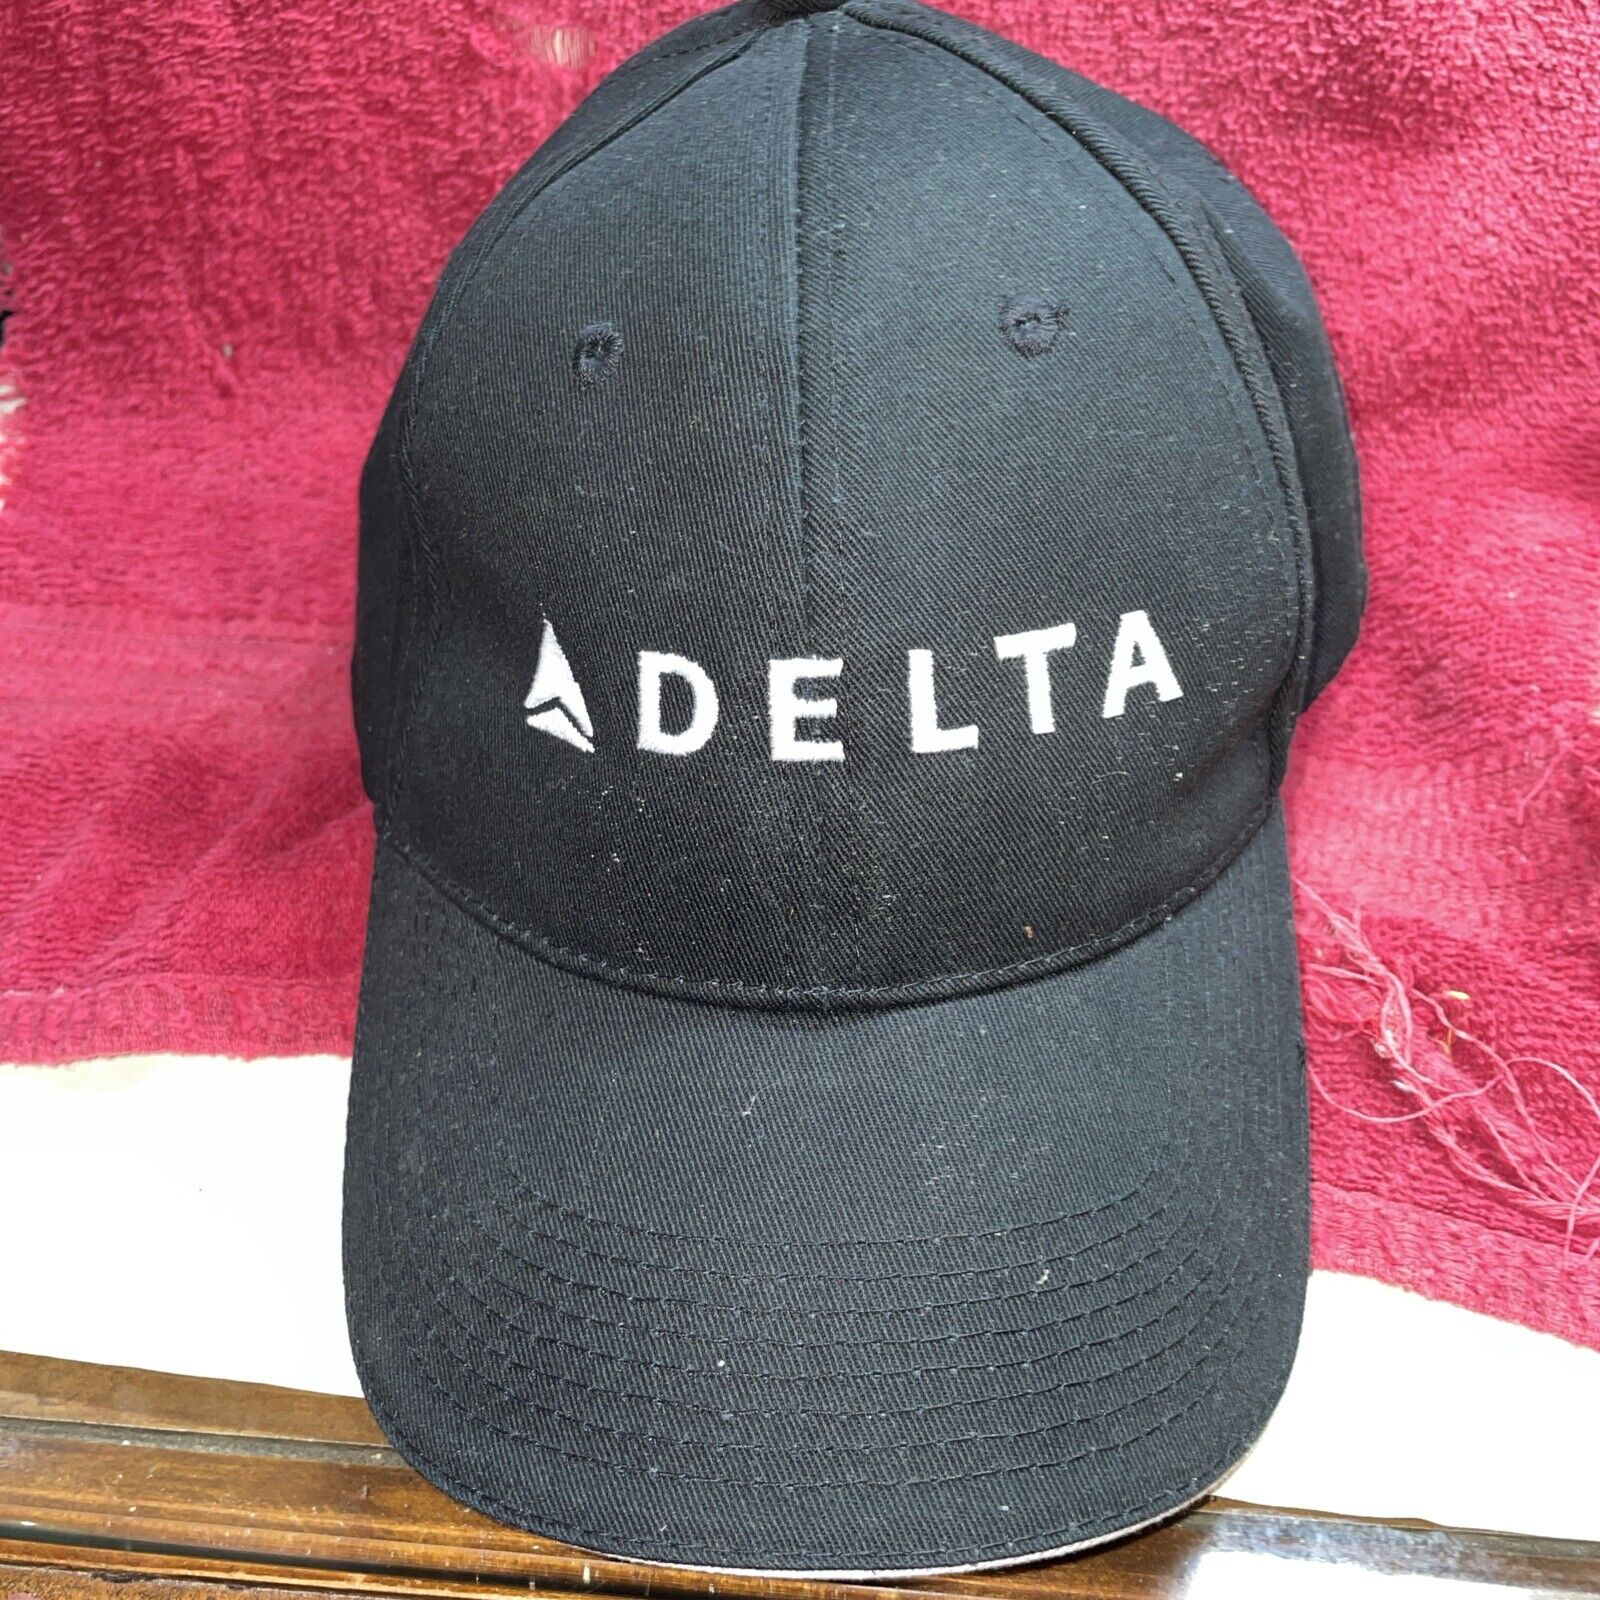 Delta Airlines Black & White Embroidered Widget Adjustable Baseball Cap Hat